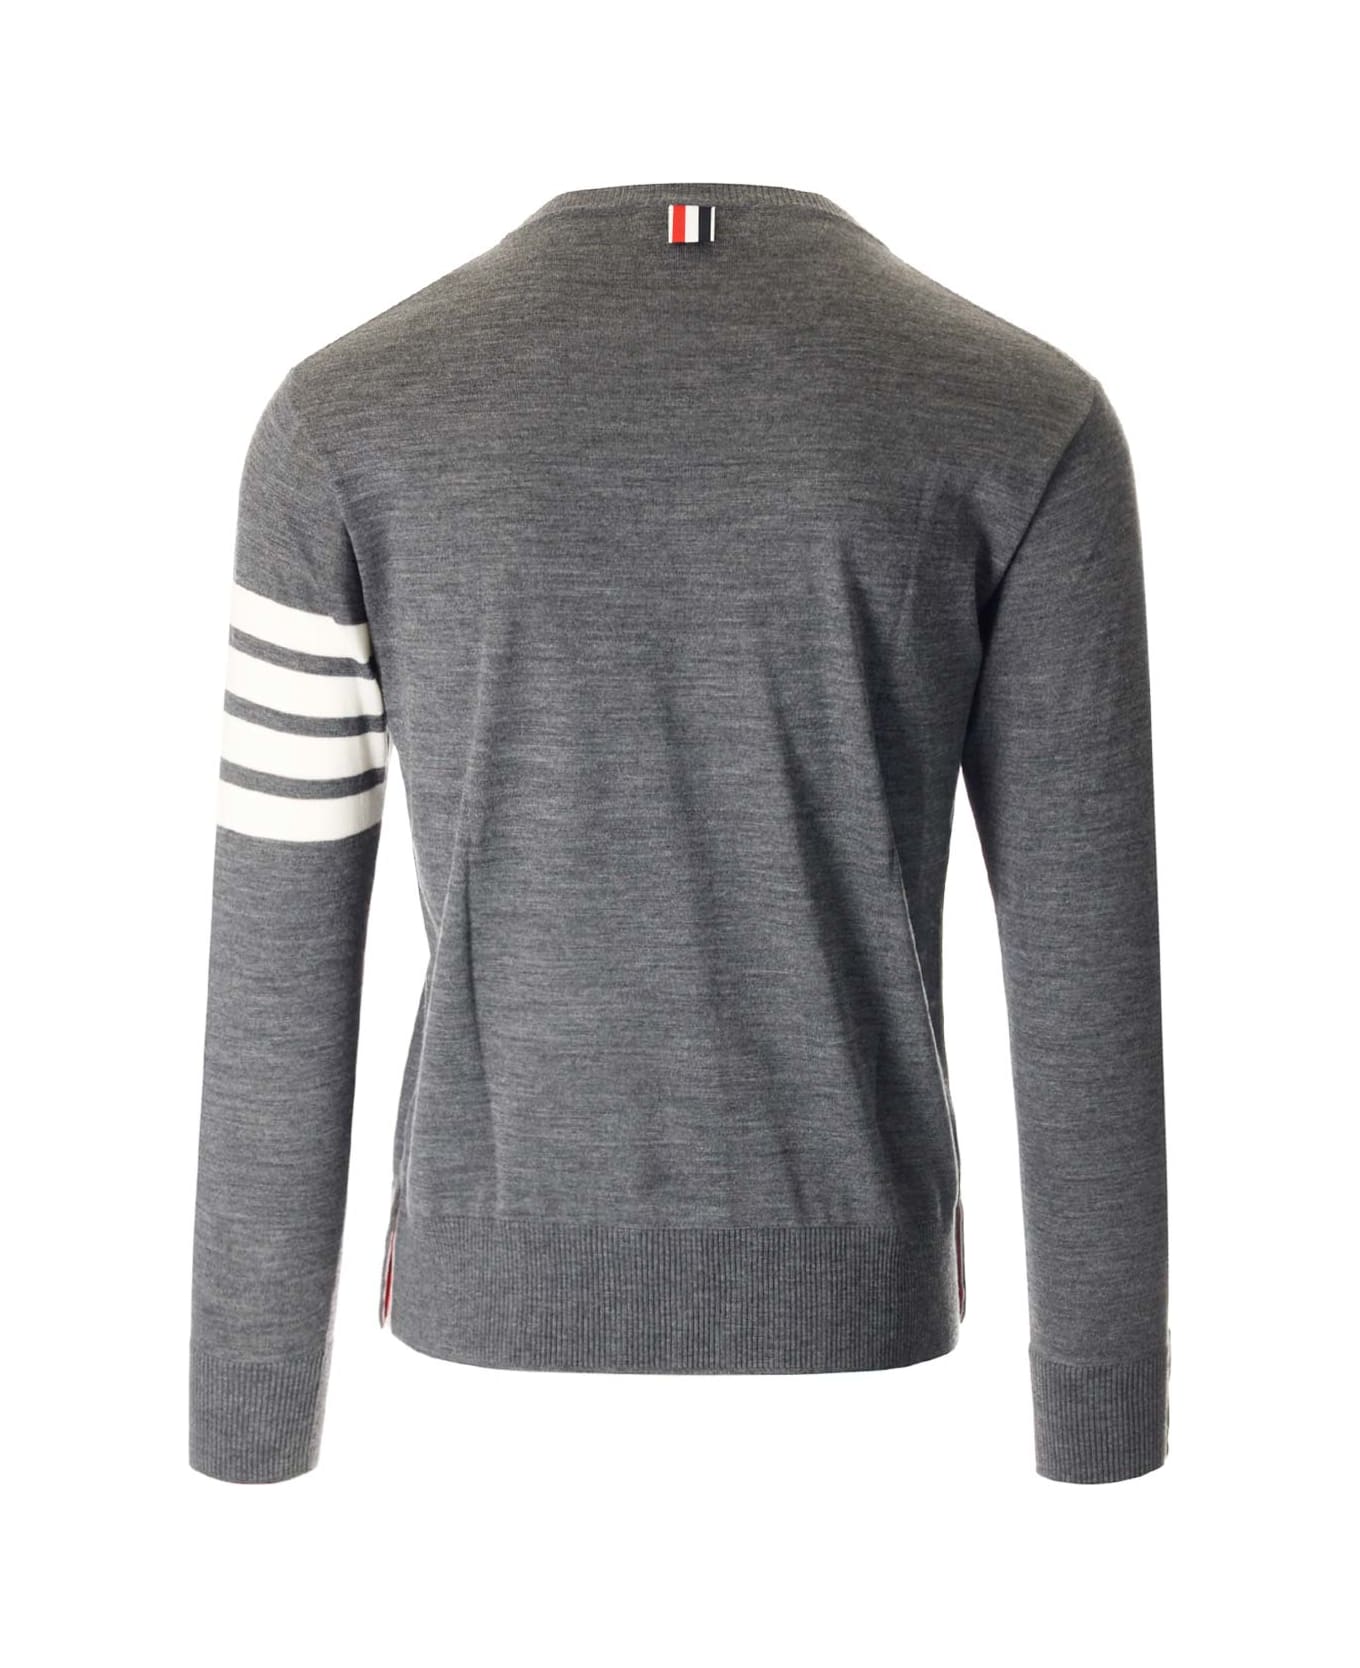 Thom Browne Grey '4-bar' Crewneck Sweater - Med Grey ニットウェア